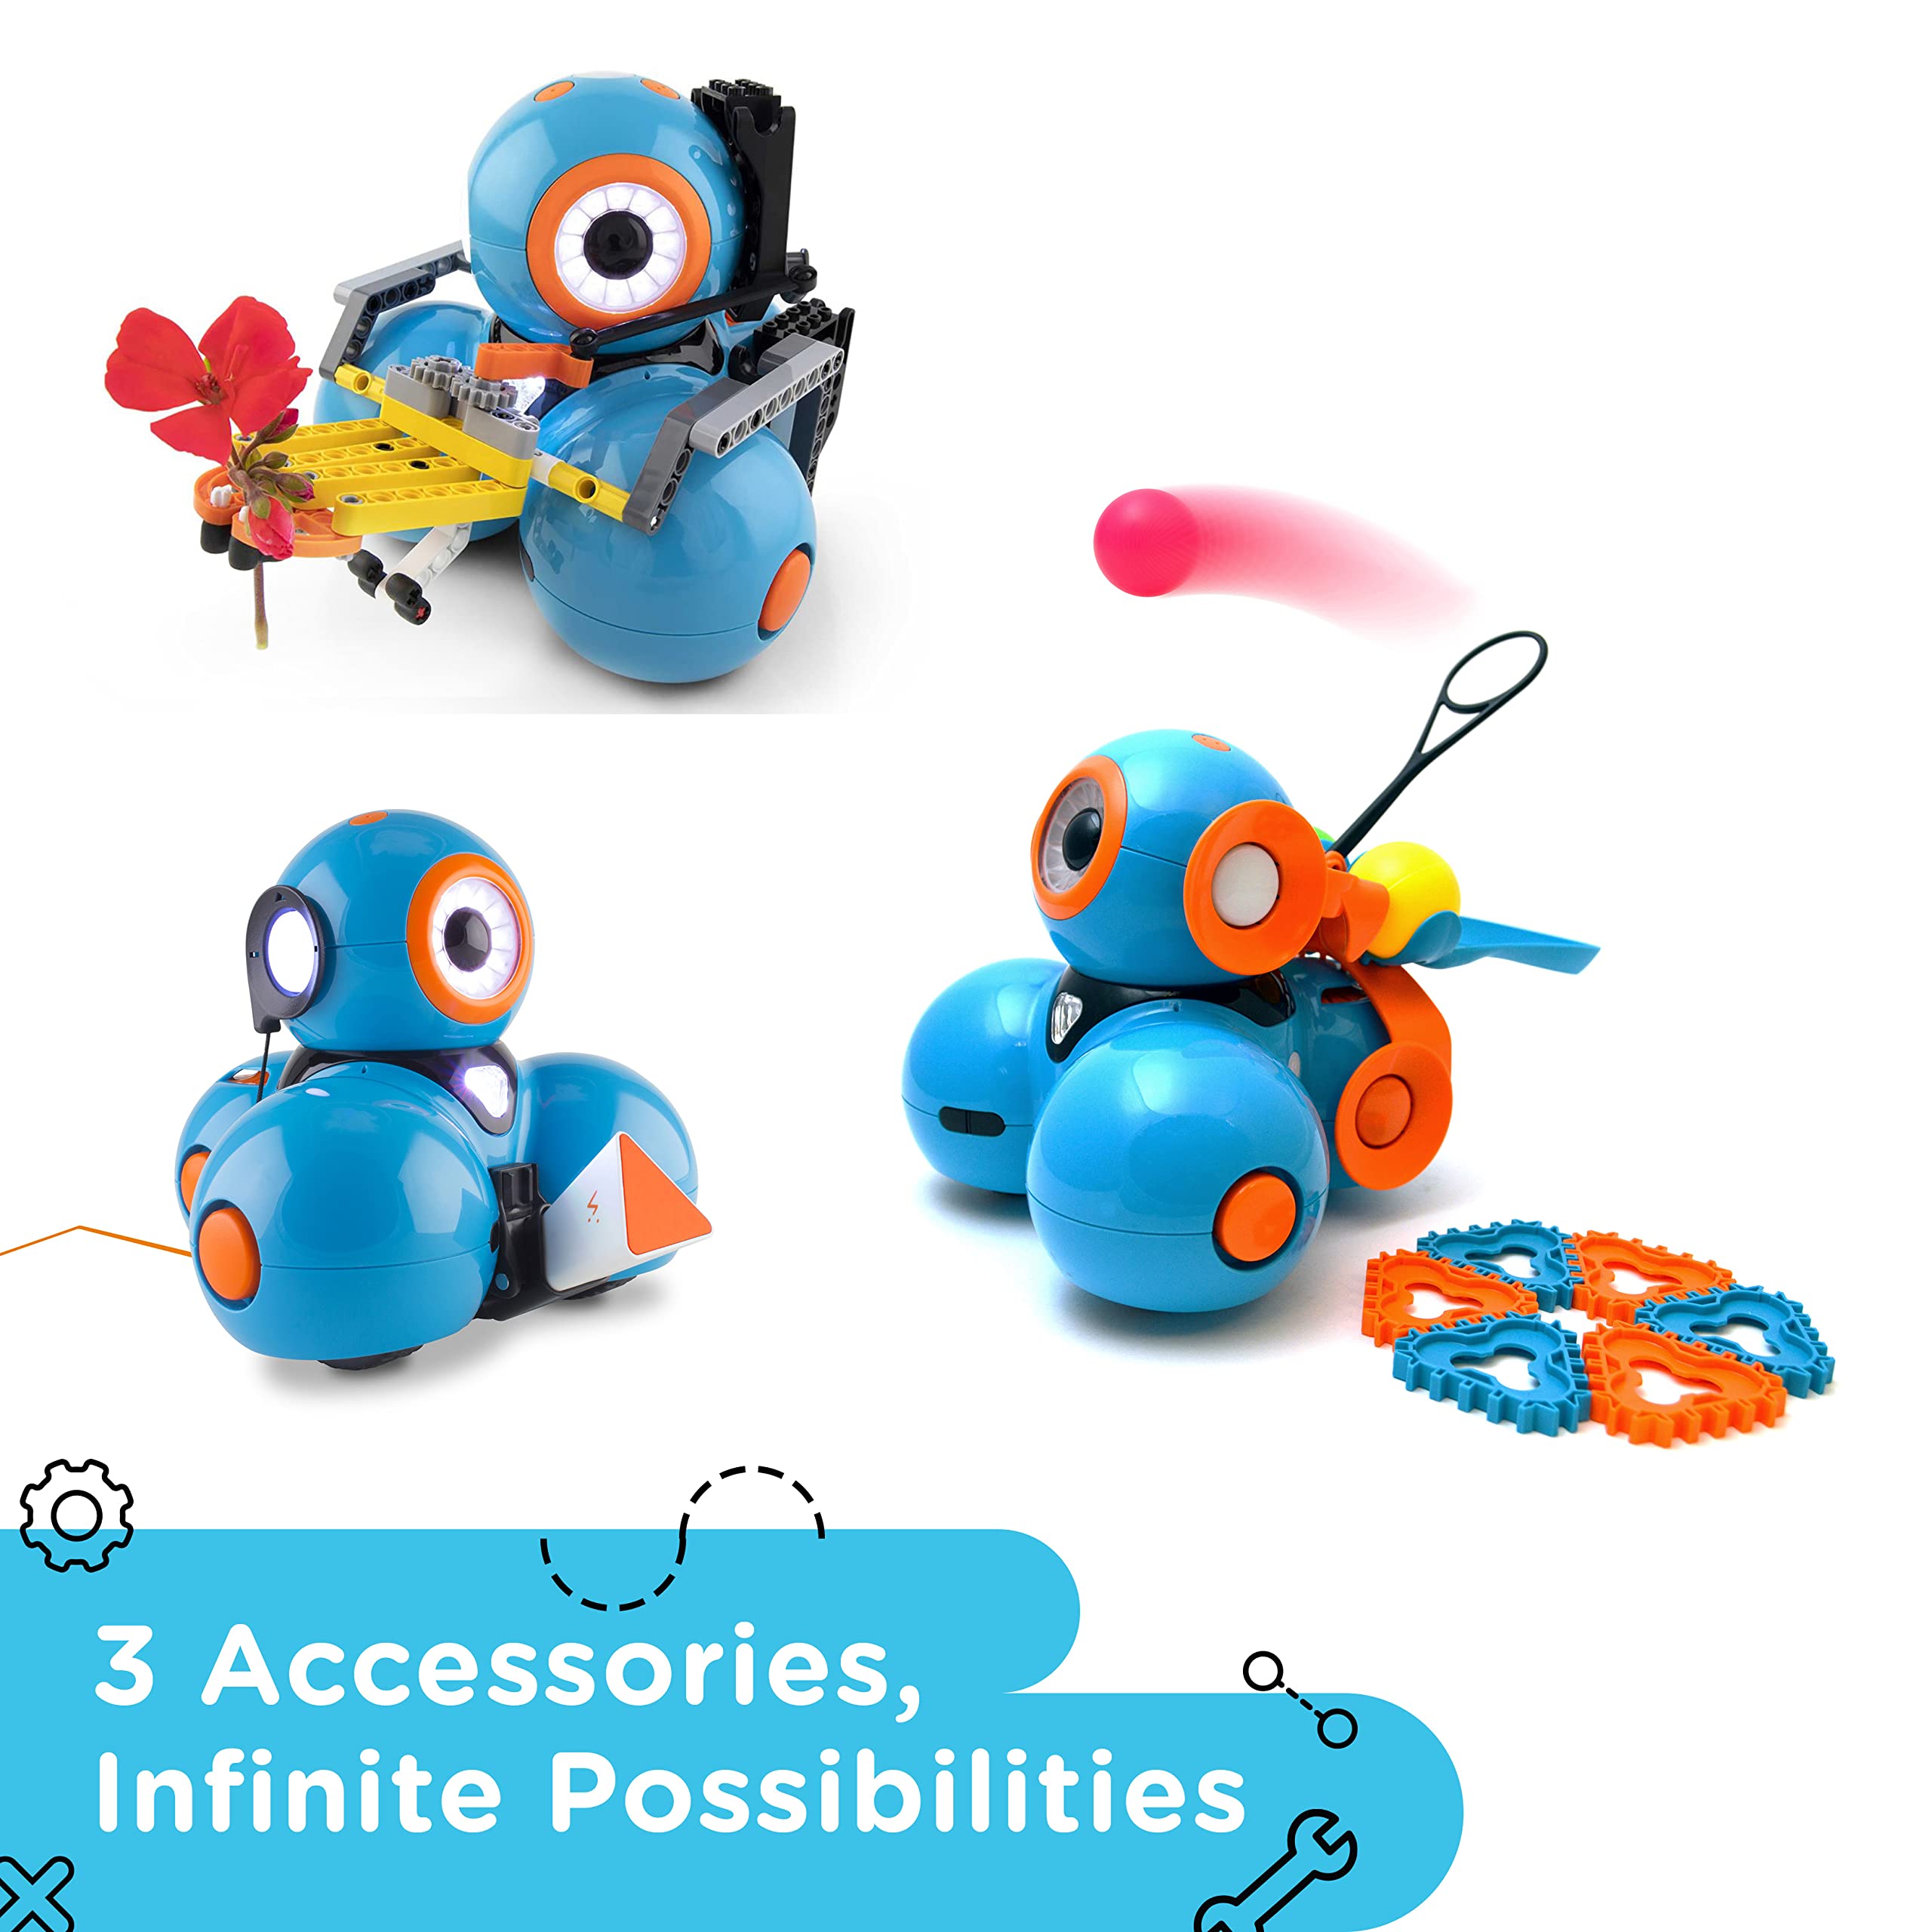 Wonder Workshop Dash Robot Wonder Pack – Coding Educational Bundle for Kids 6+ – Free STEM Apps with Instructional Videos - Launcher Toy, Sketch Kit Drawing, Gripper Building